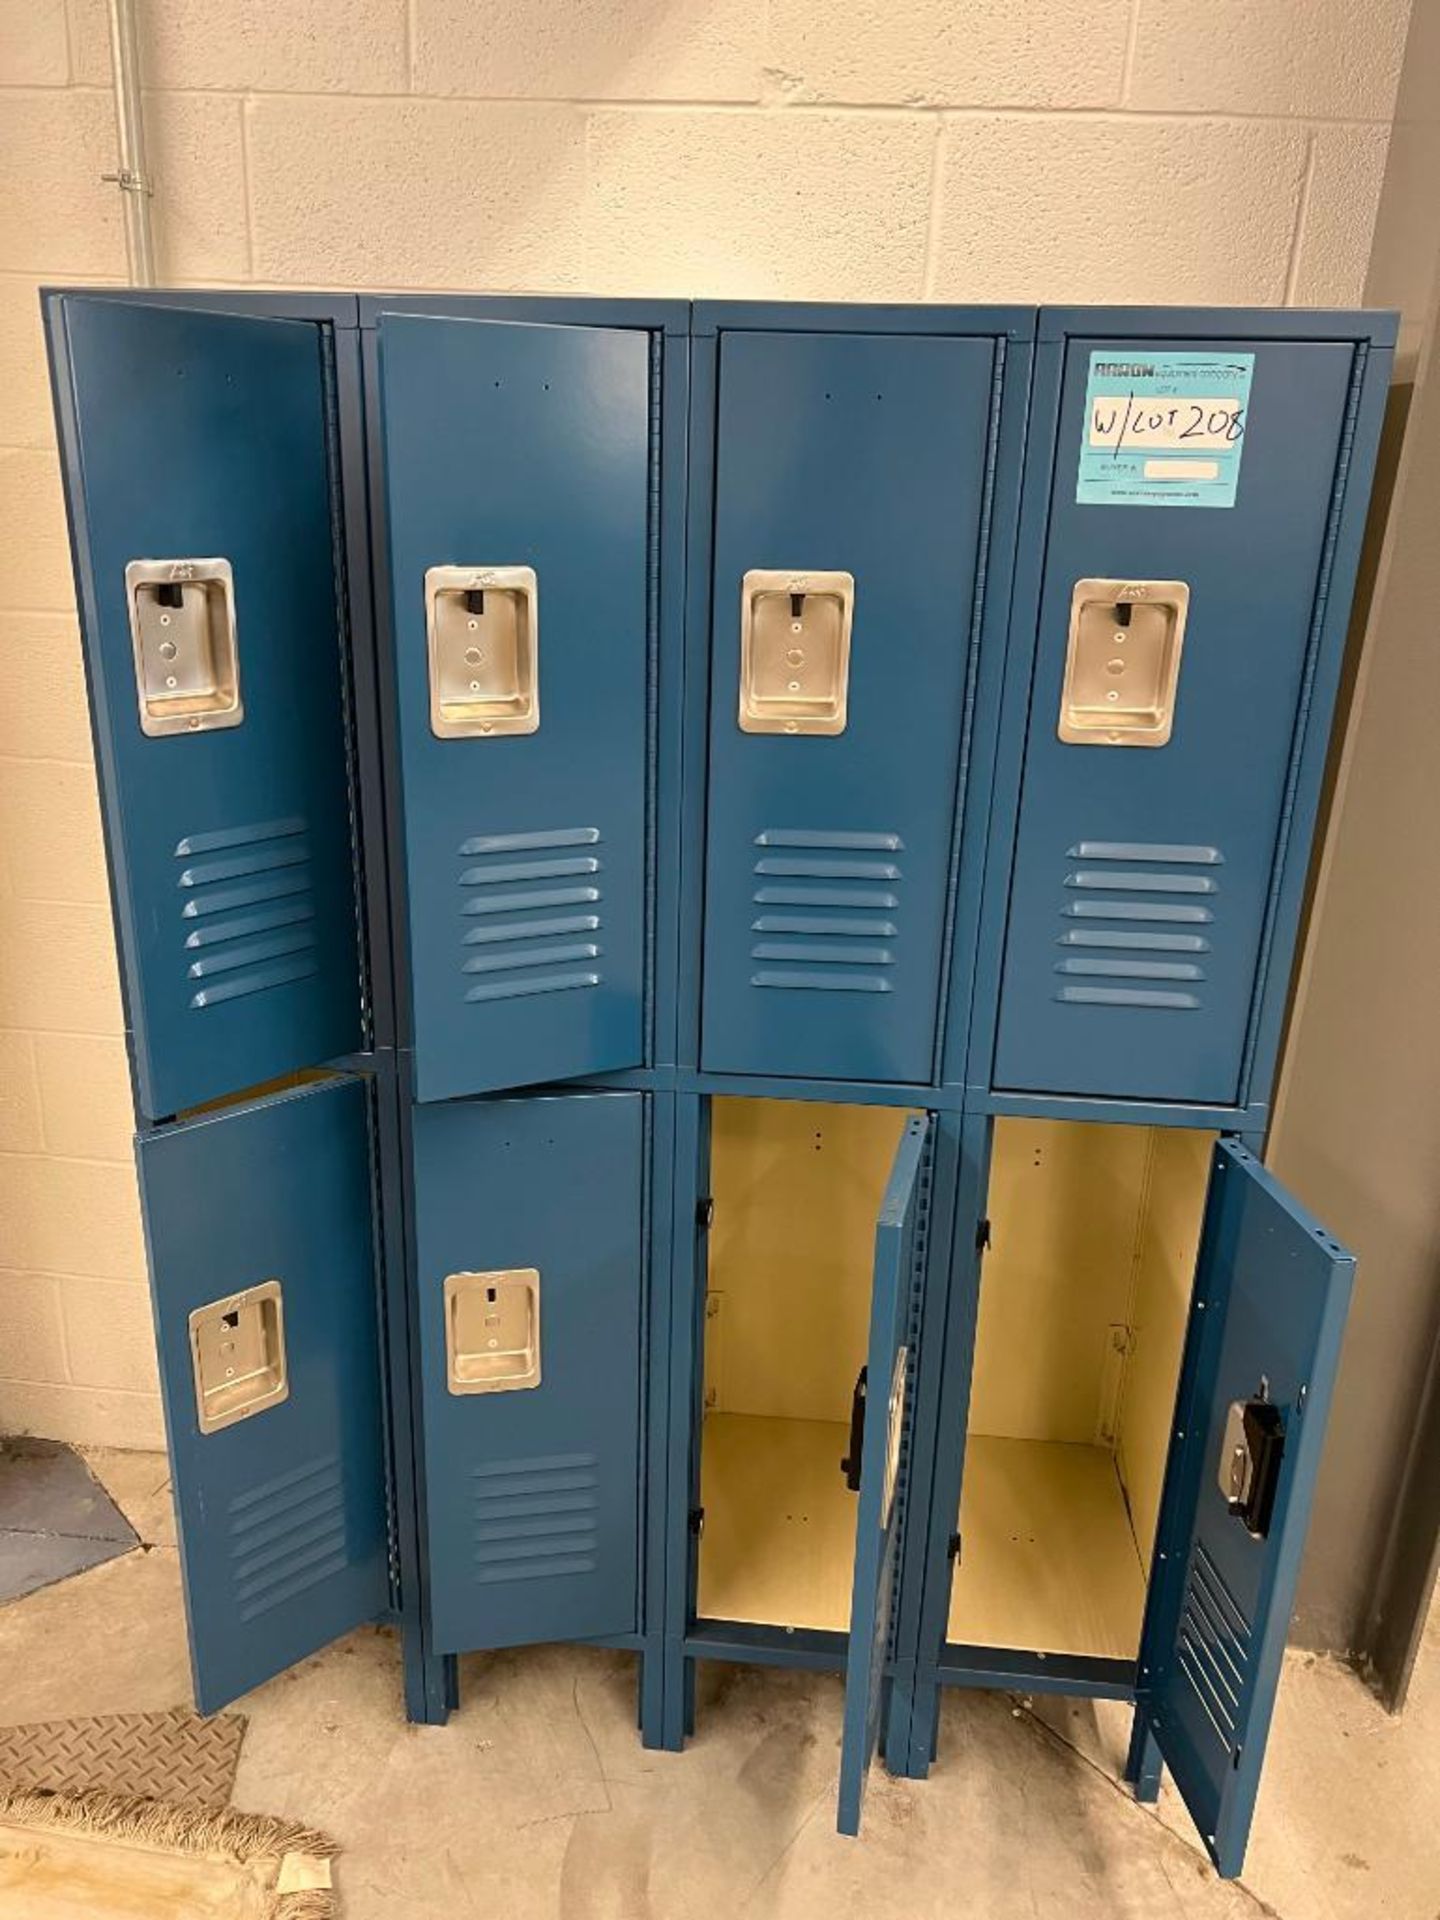 Two banks of 8 blue, pad lockable, half height lockers. Sixteen total lockers.